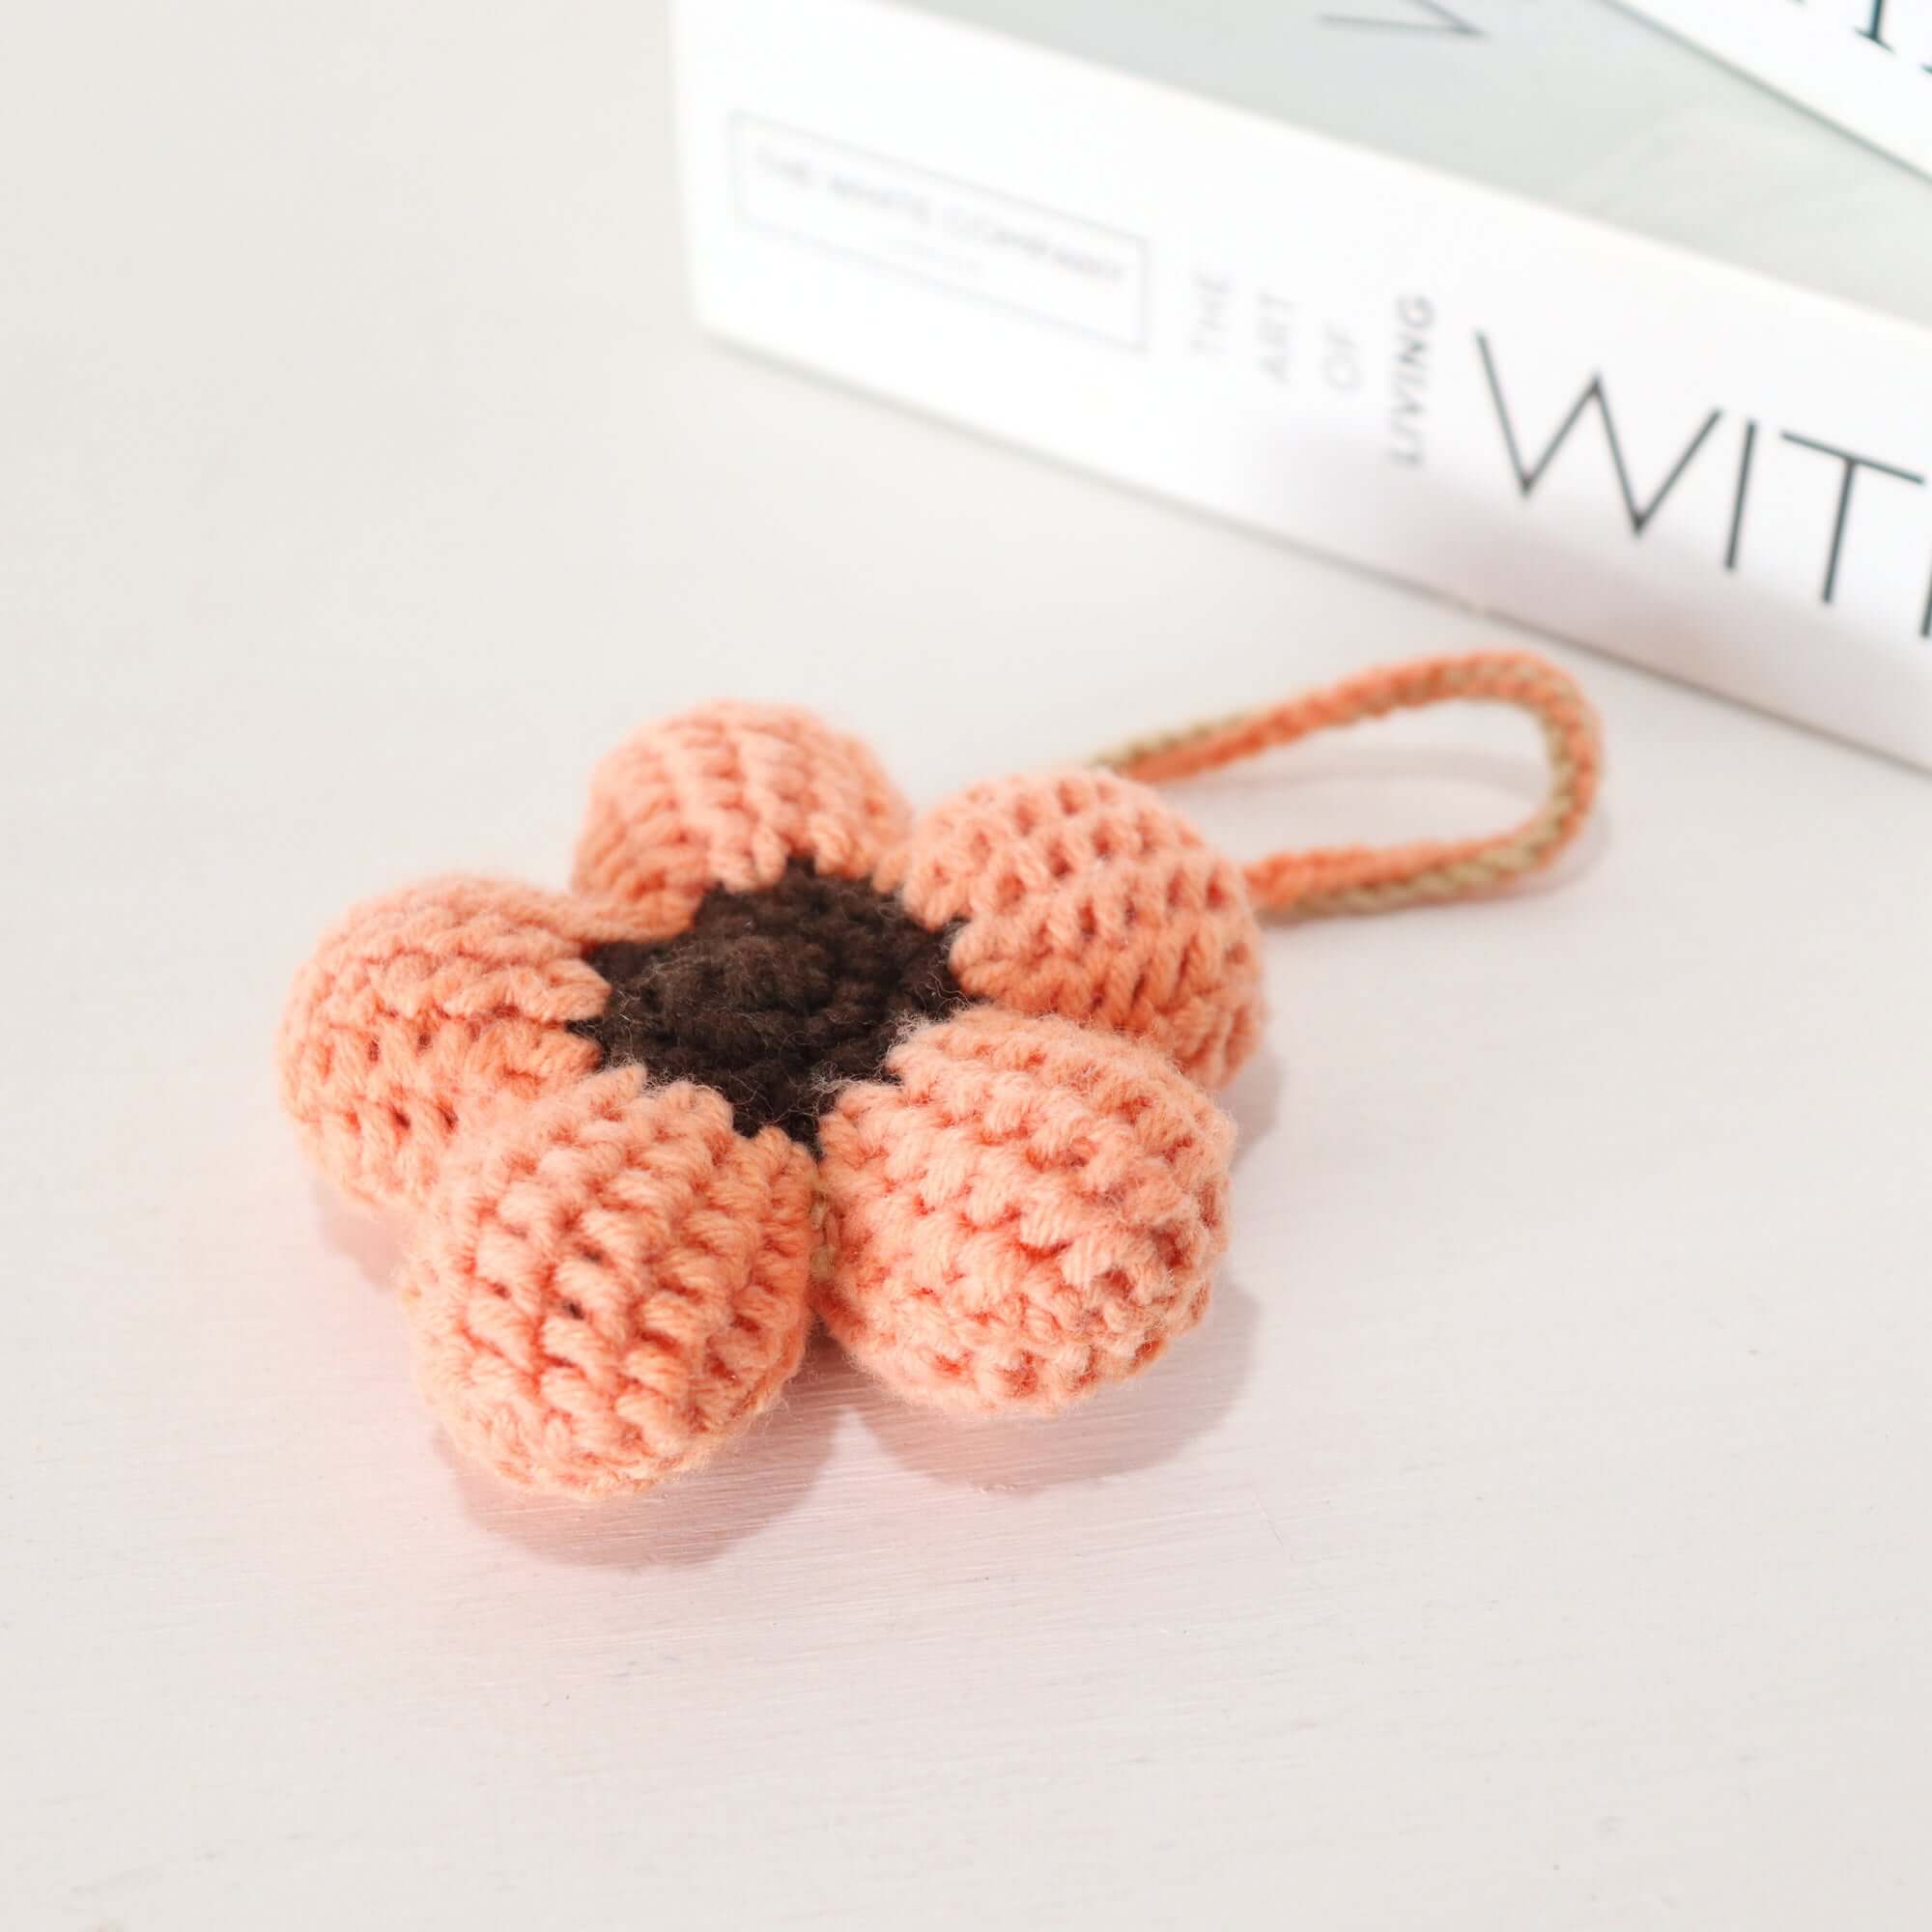 Handmade Crochet Flower Keychain